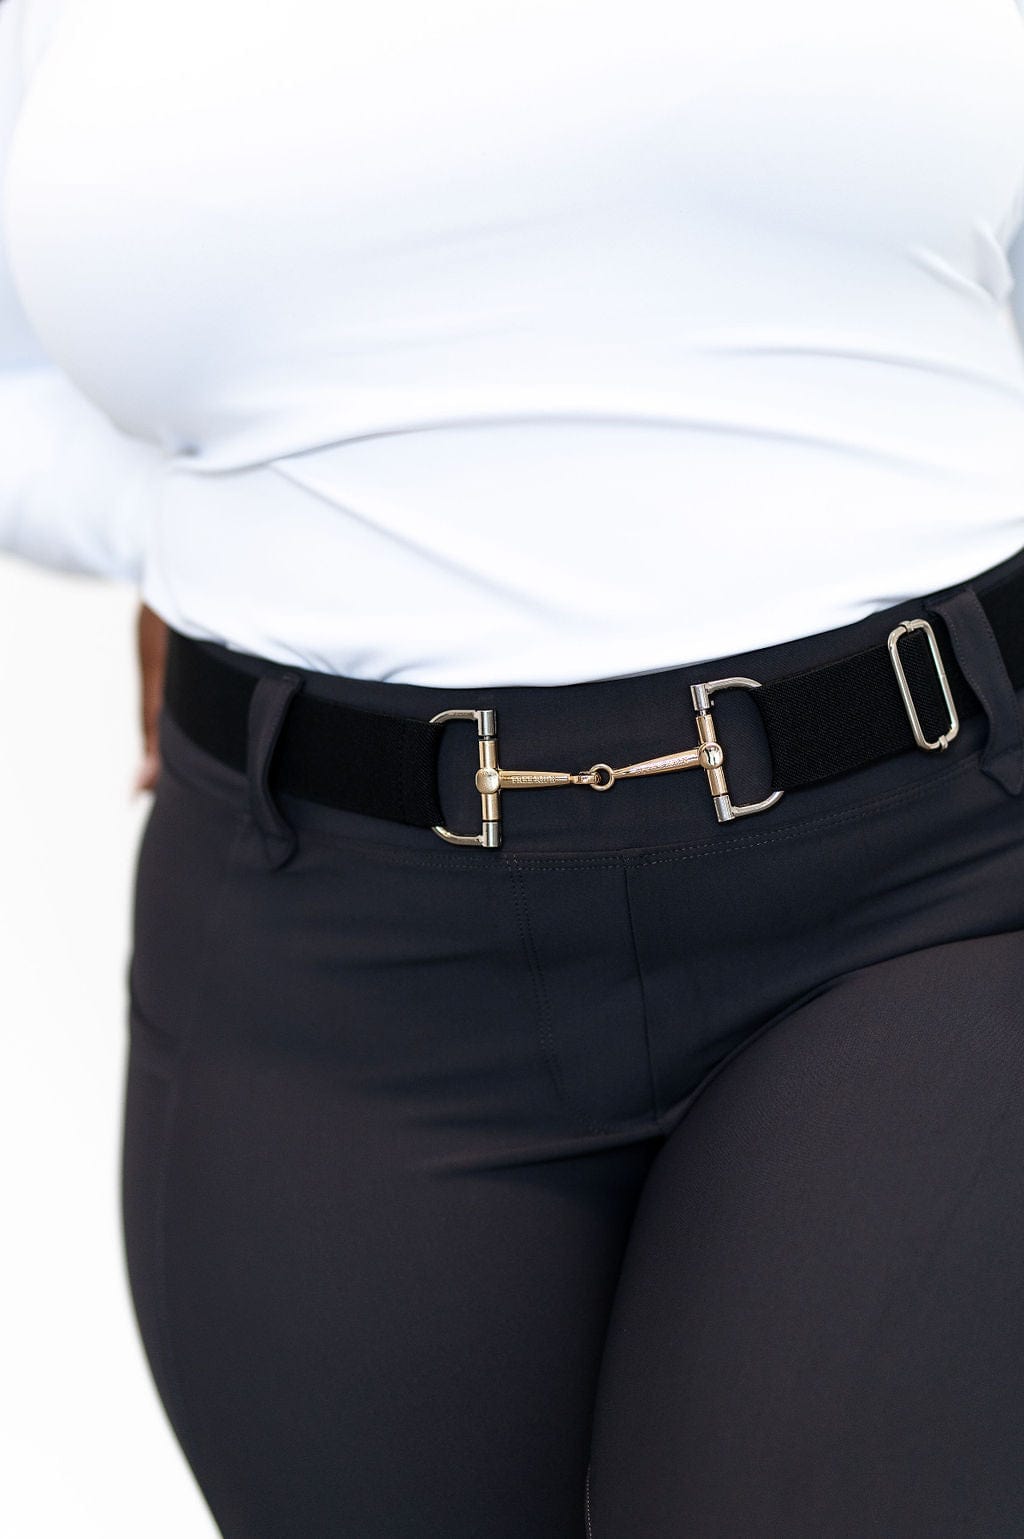 designer belts women